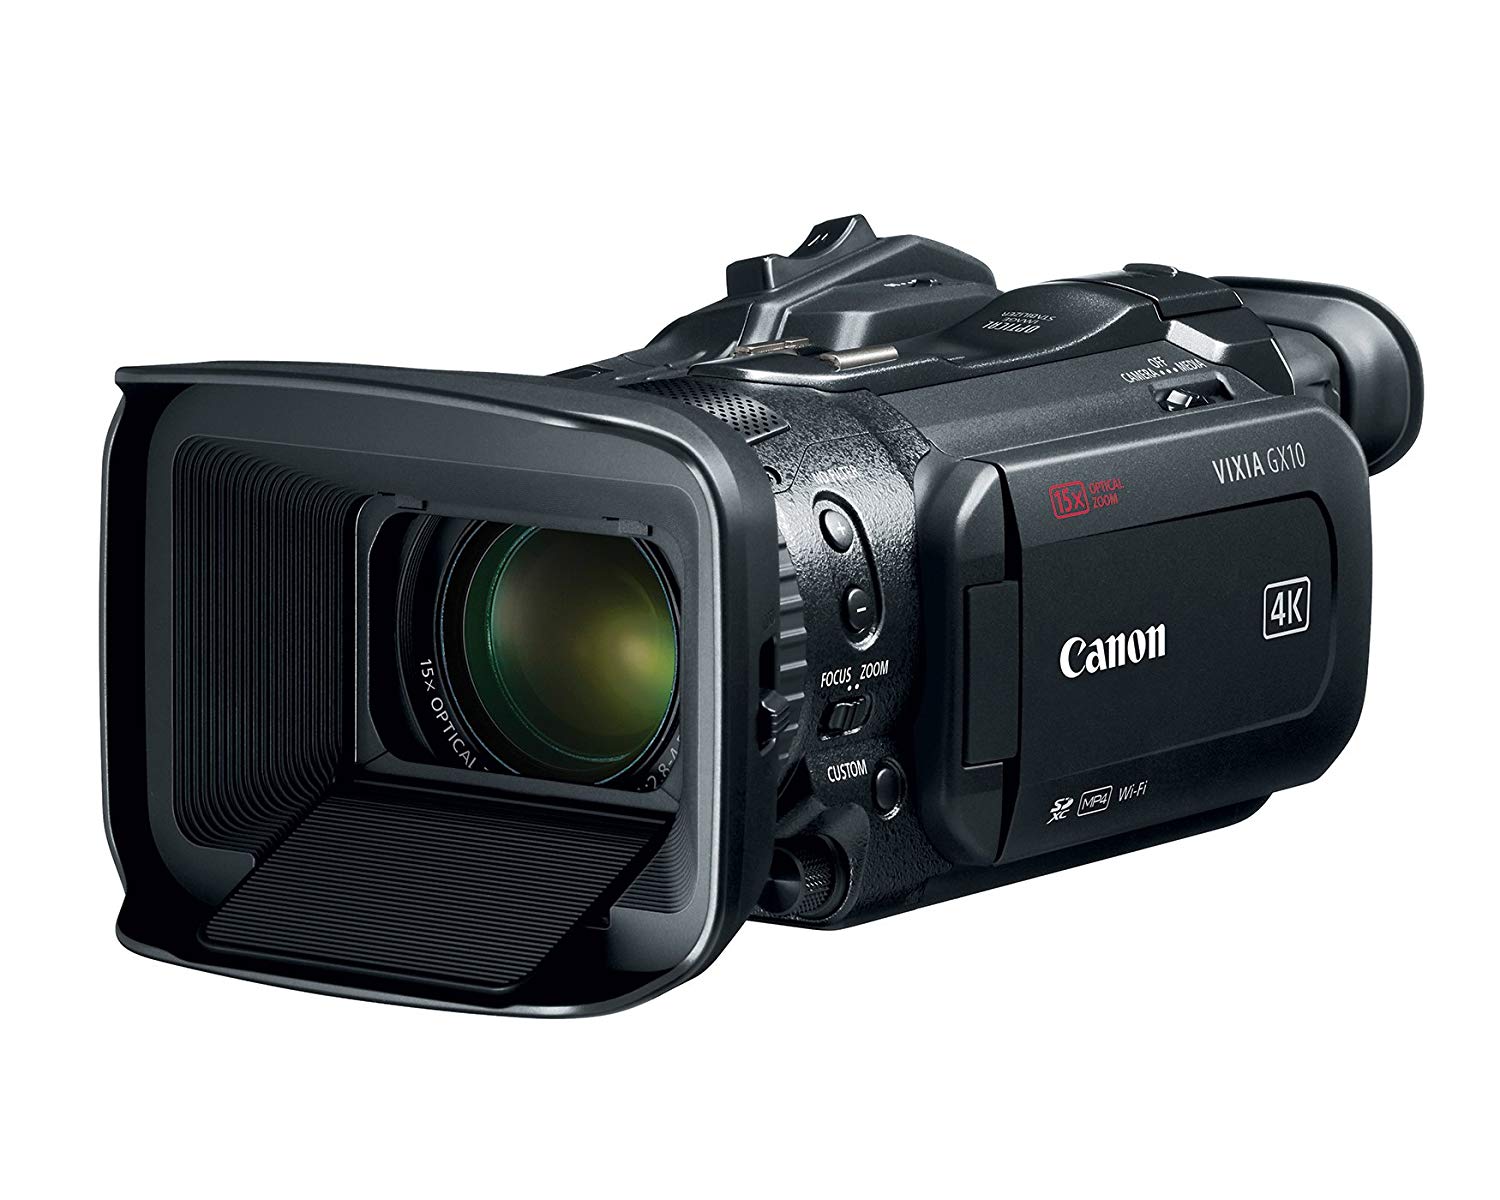 Canon Vixia GX10 WiK-4K Ultra HD Digital Video Camcorde...